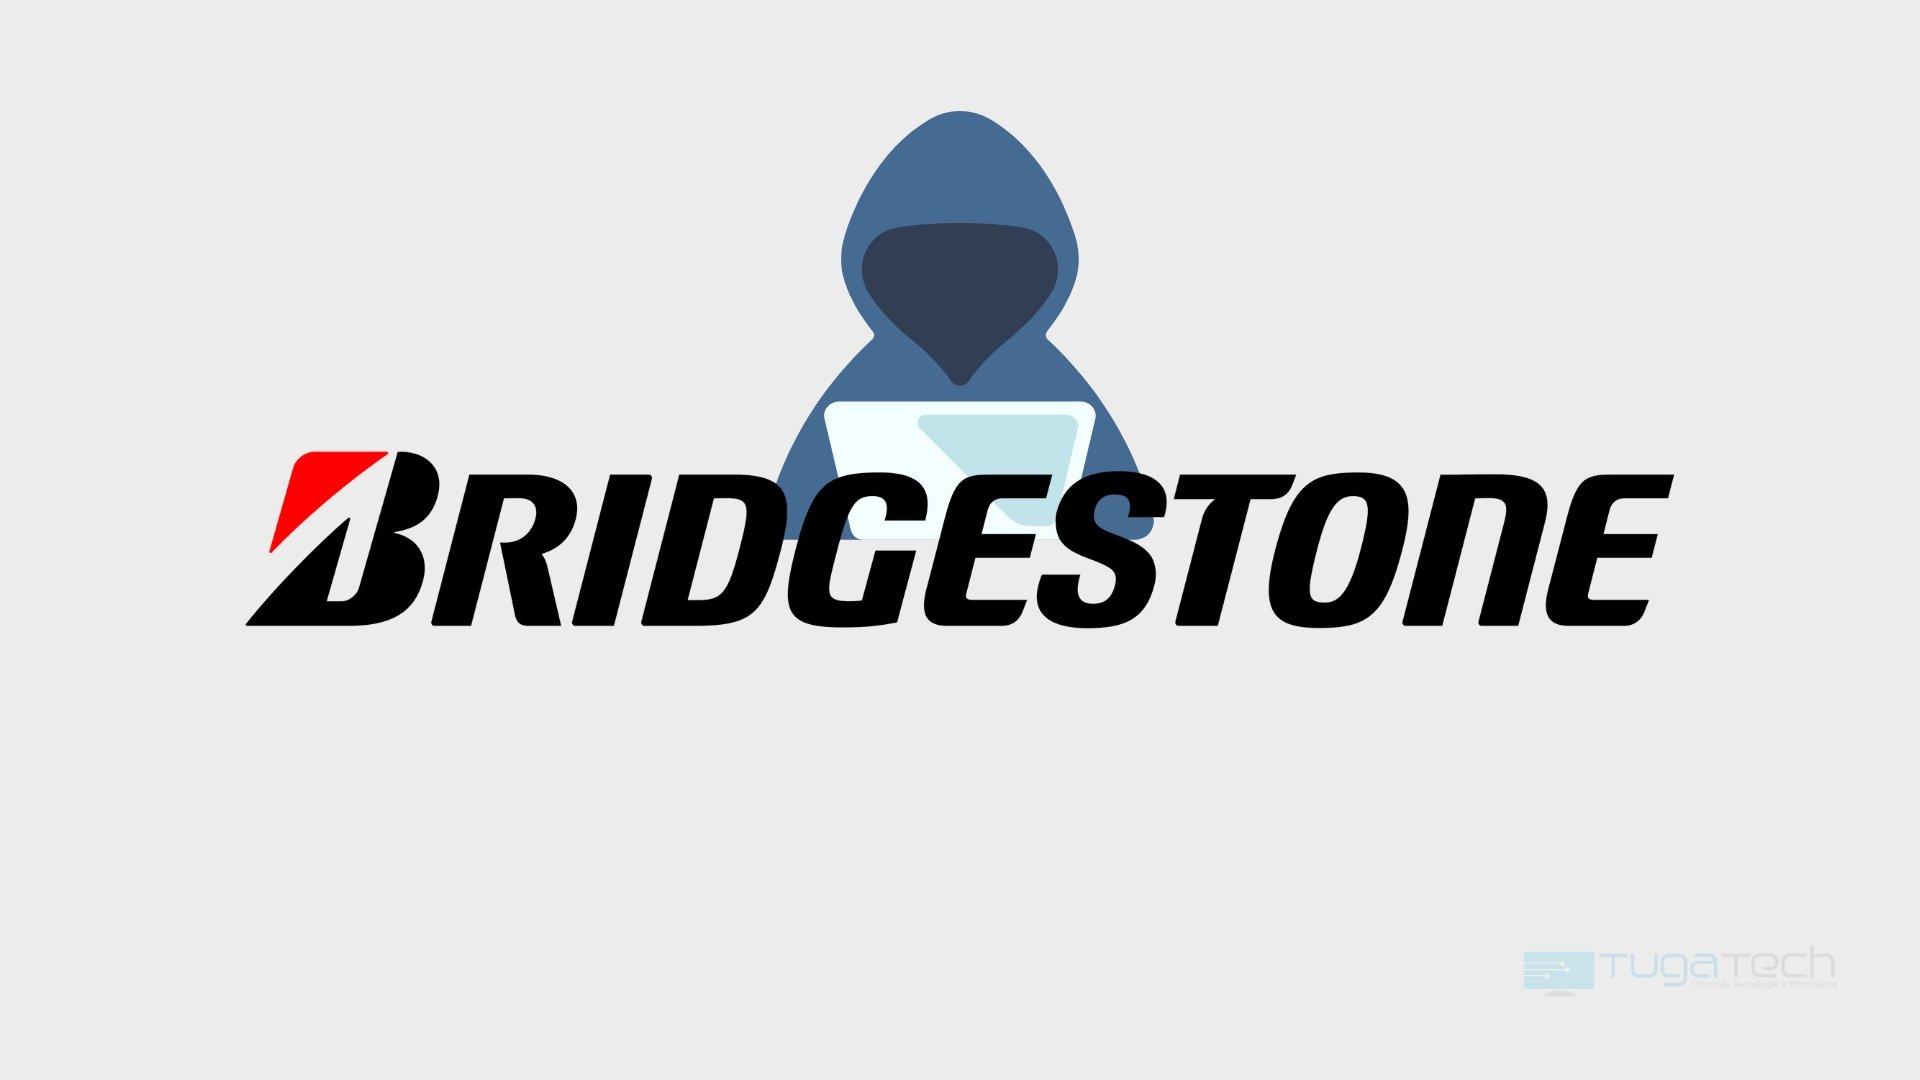 Bridgestone malware